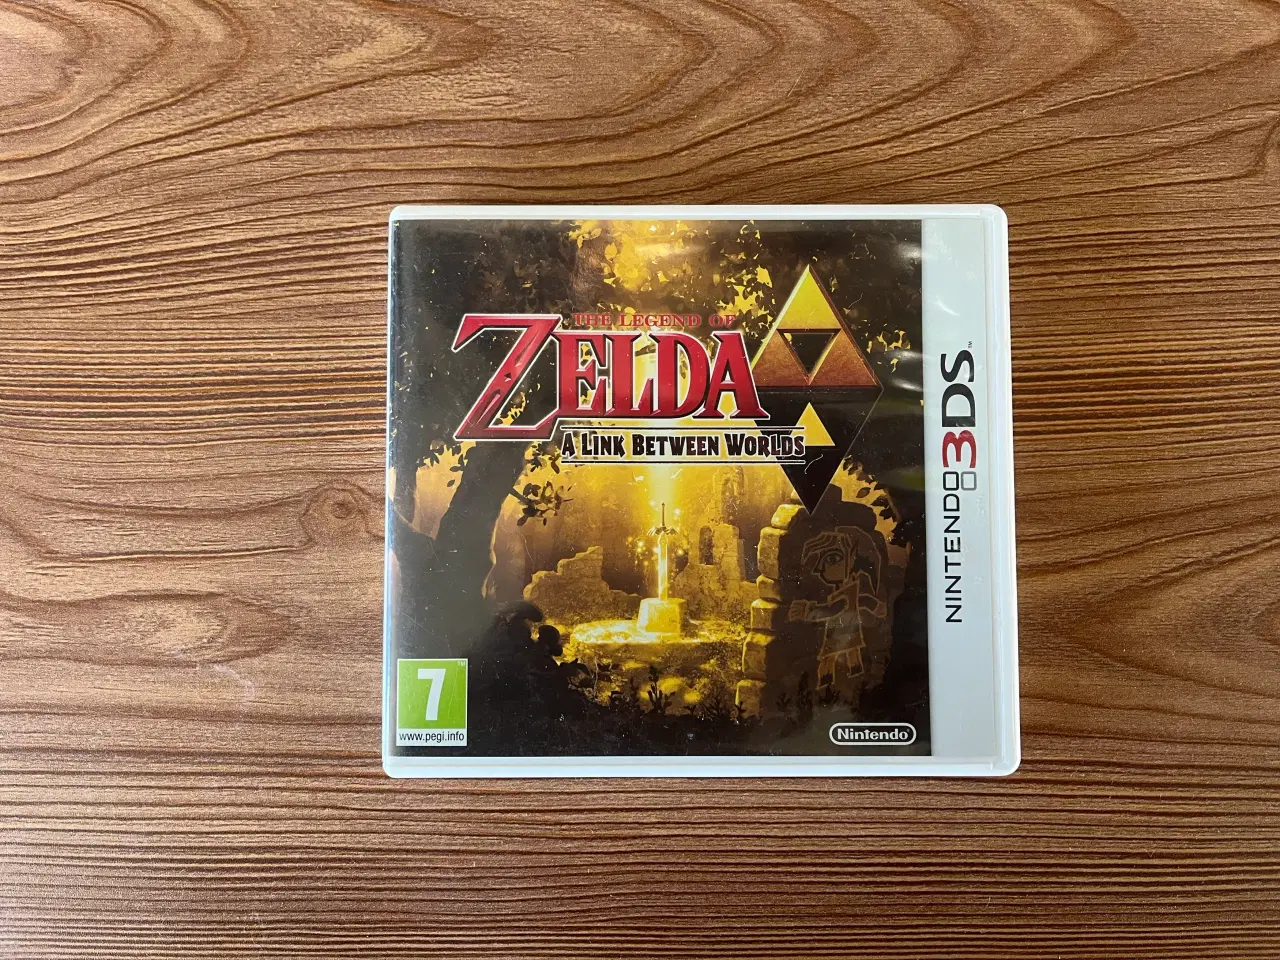 Billede 1 - The Legend Of Zelda A Link Between Worlds, 3DS